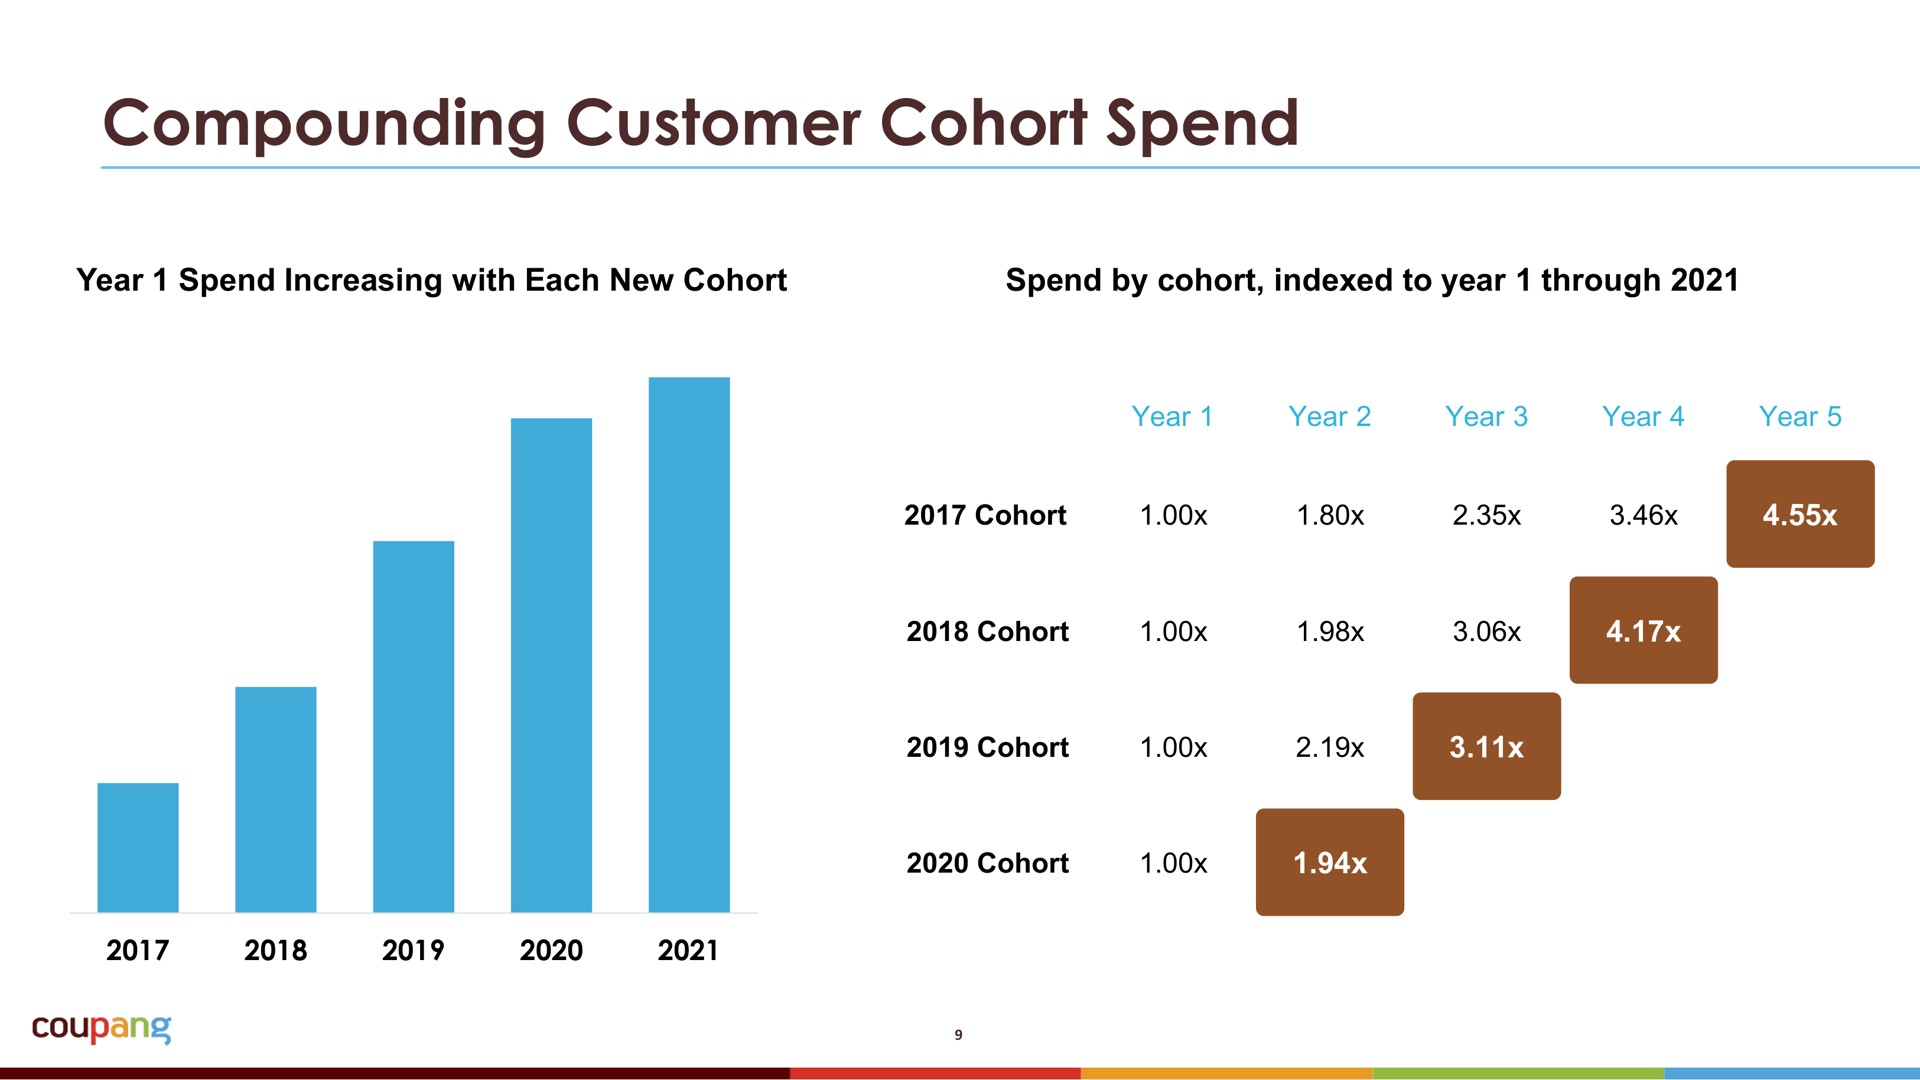 compounding customer cohort spend | Coupang